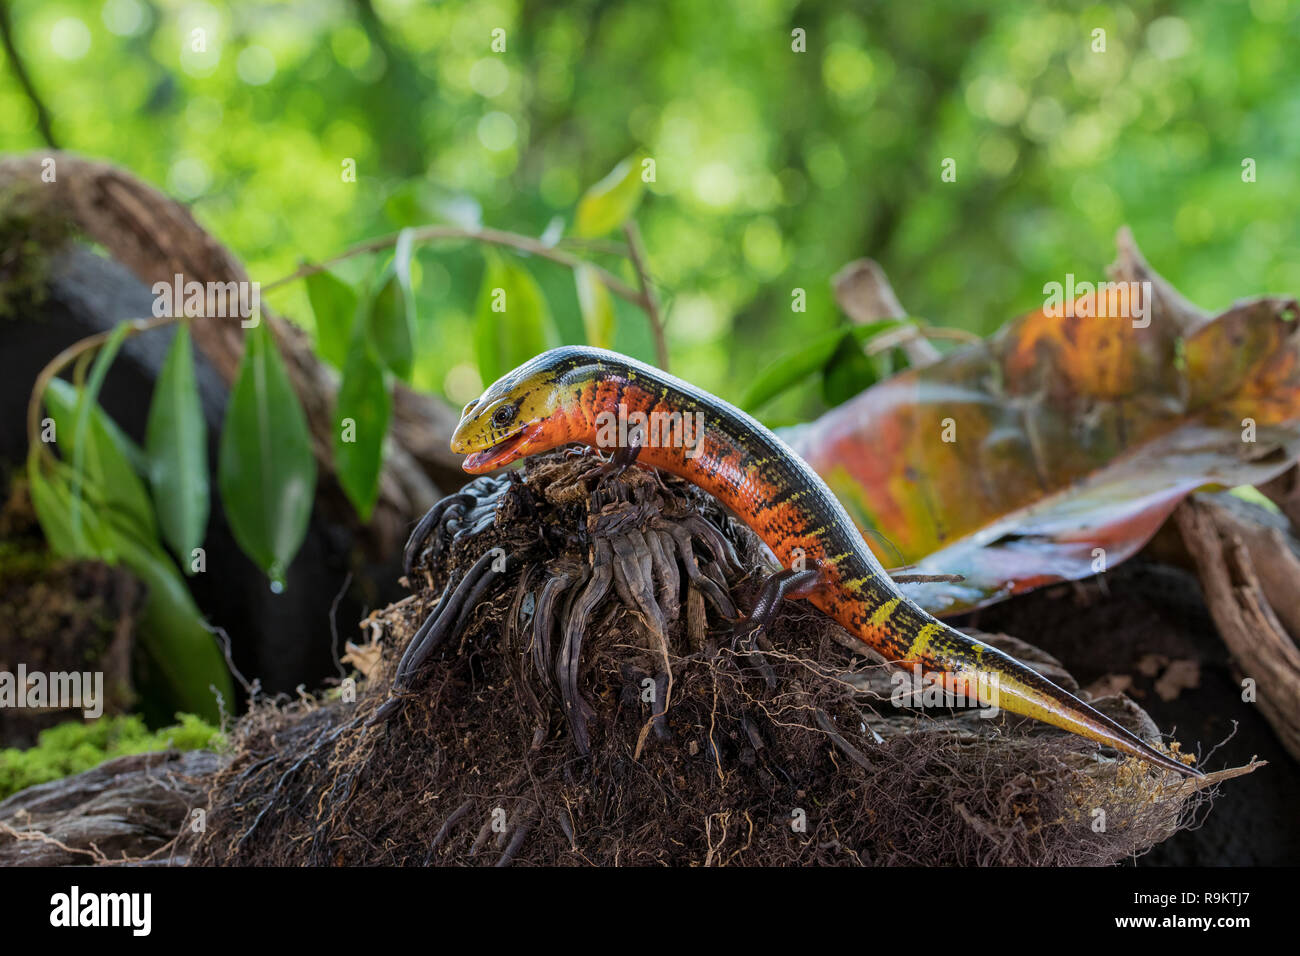 Red Galliwasp reptile in Costa Rica Stock Photo